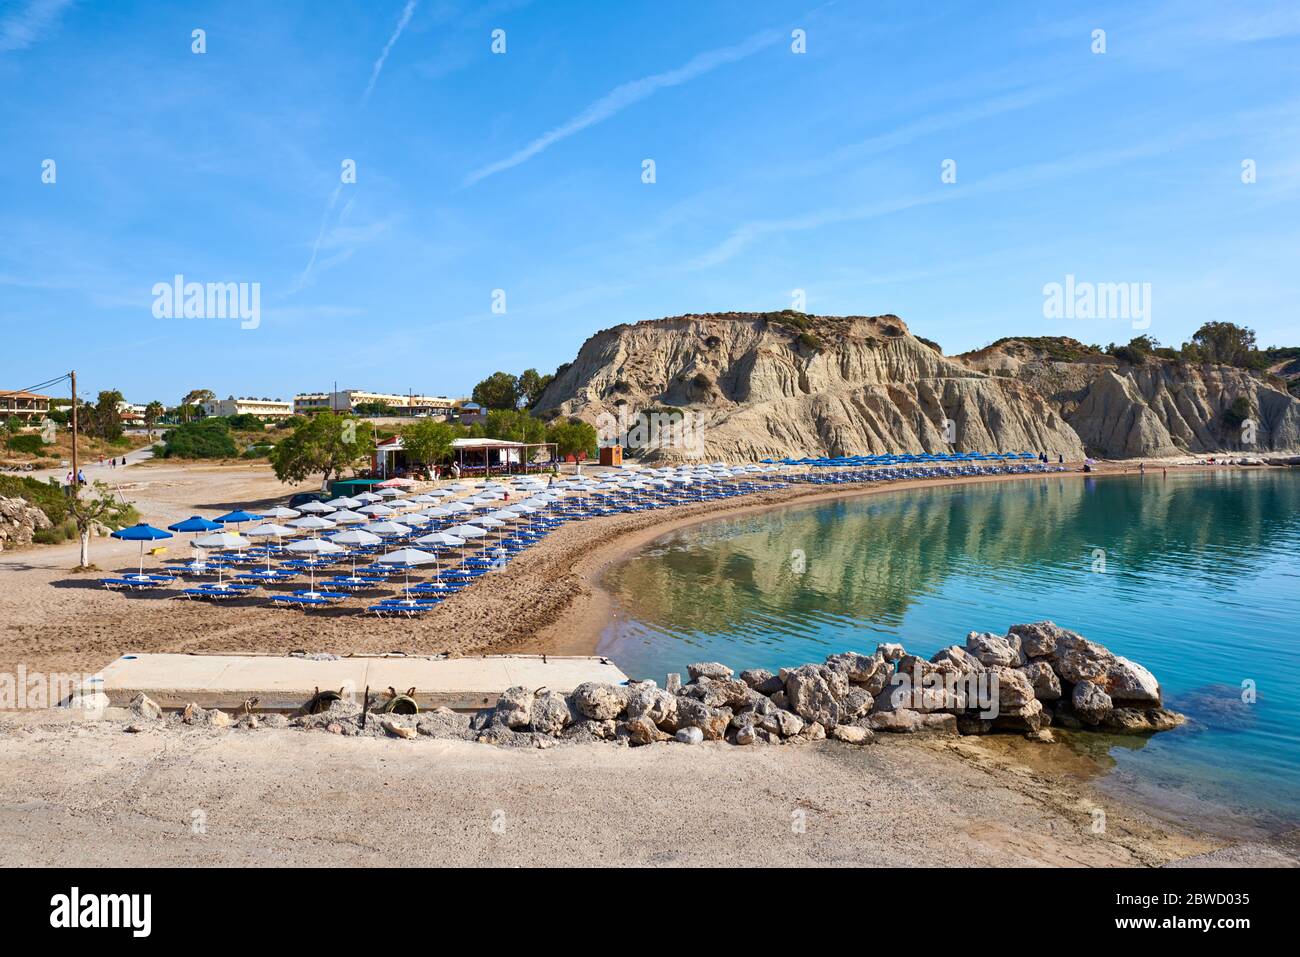 Kolymbia beach with sun loungers on Rhodes island. Greece Stock Photo